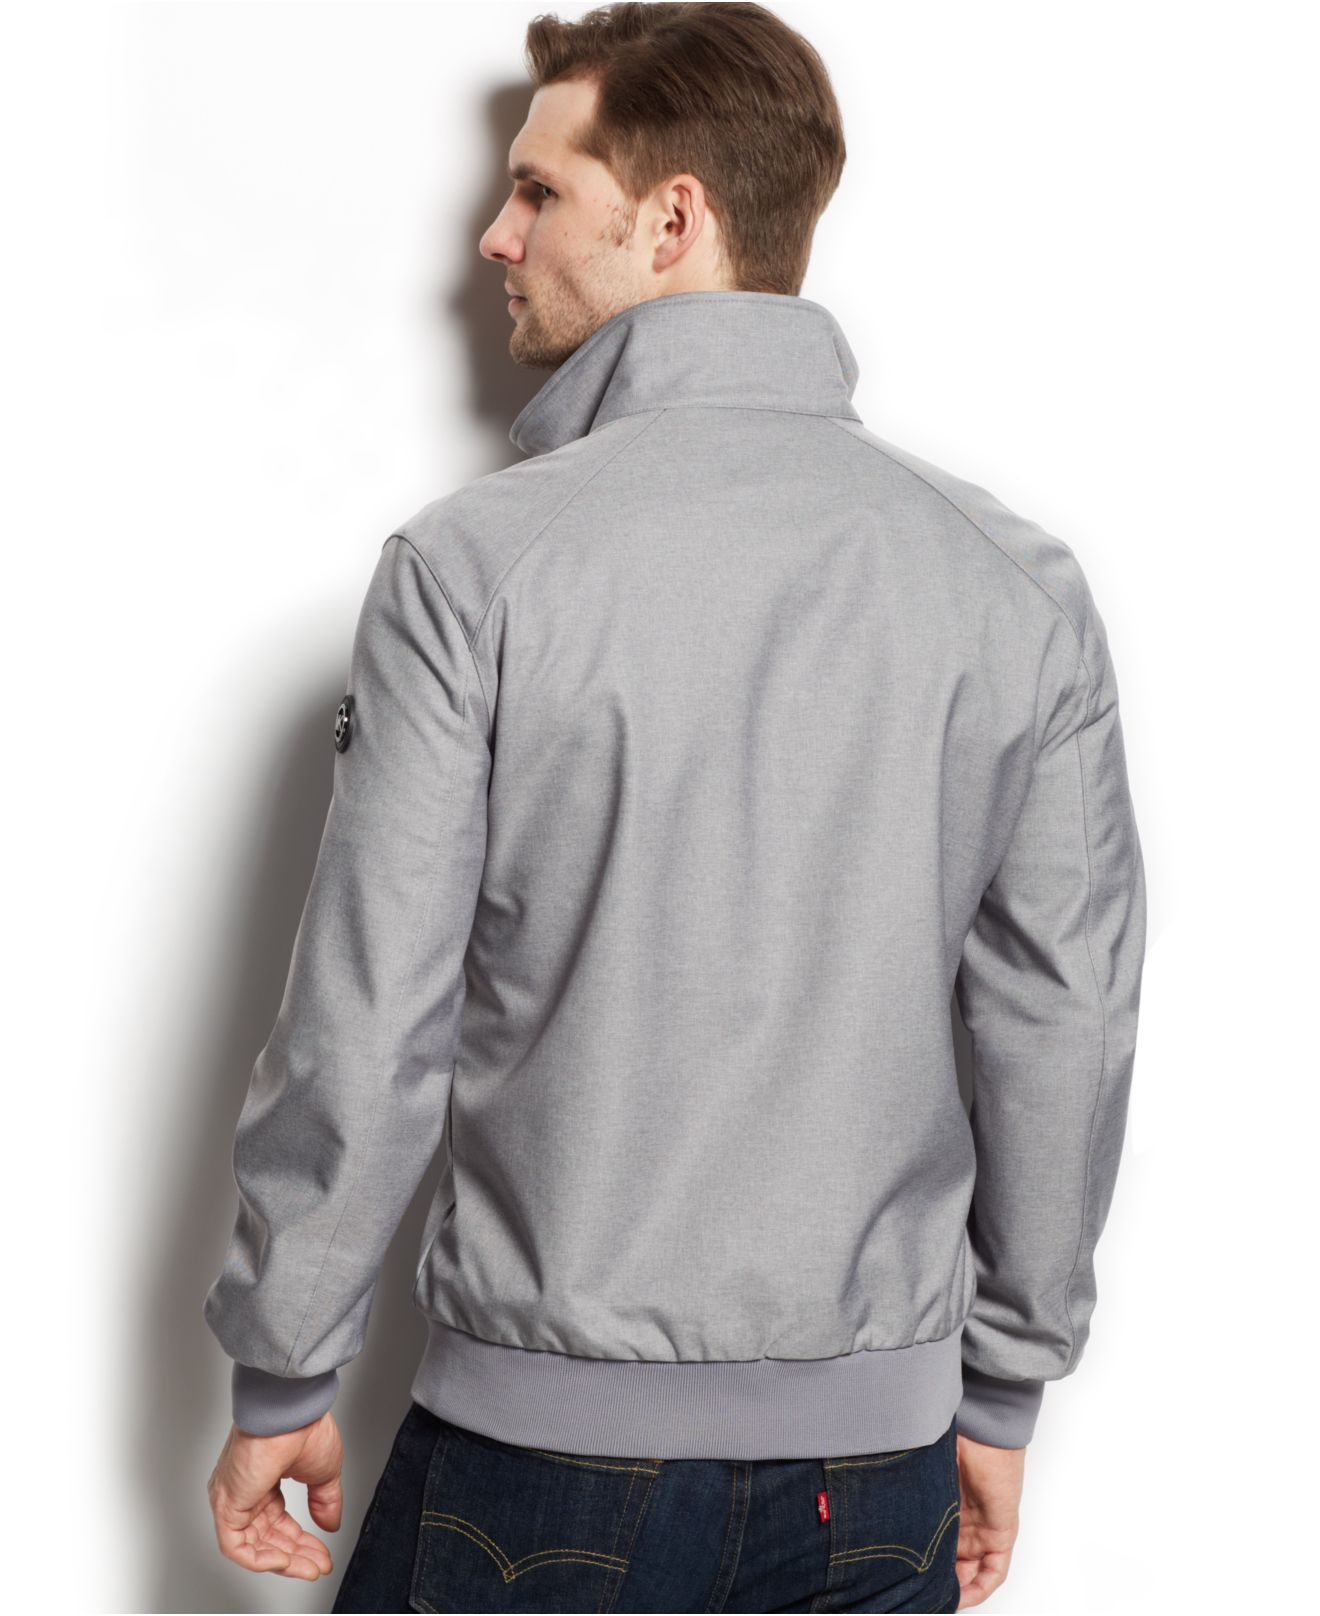 michael kors gray jacket